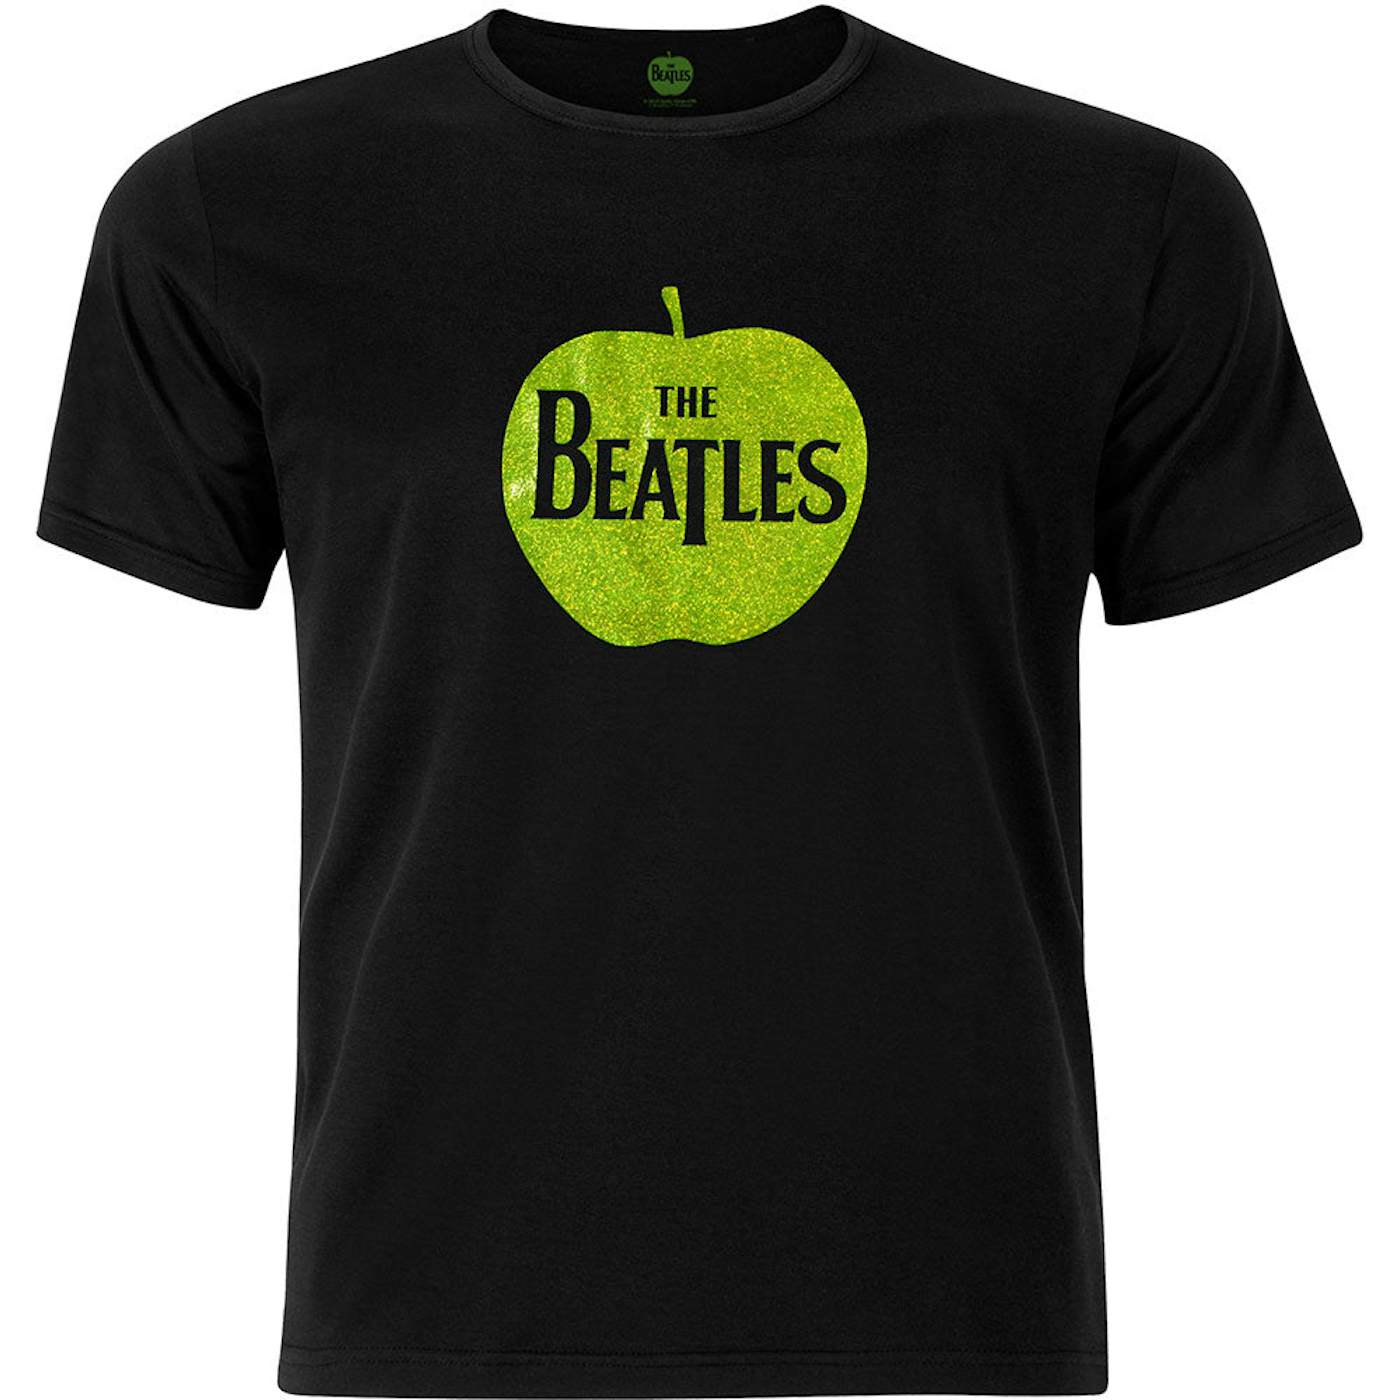 The Beatles- T-Shirt - Apple Green Sparkle (Bolur)